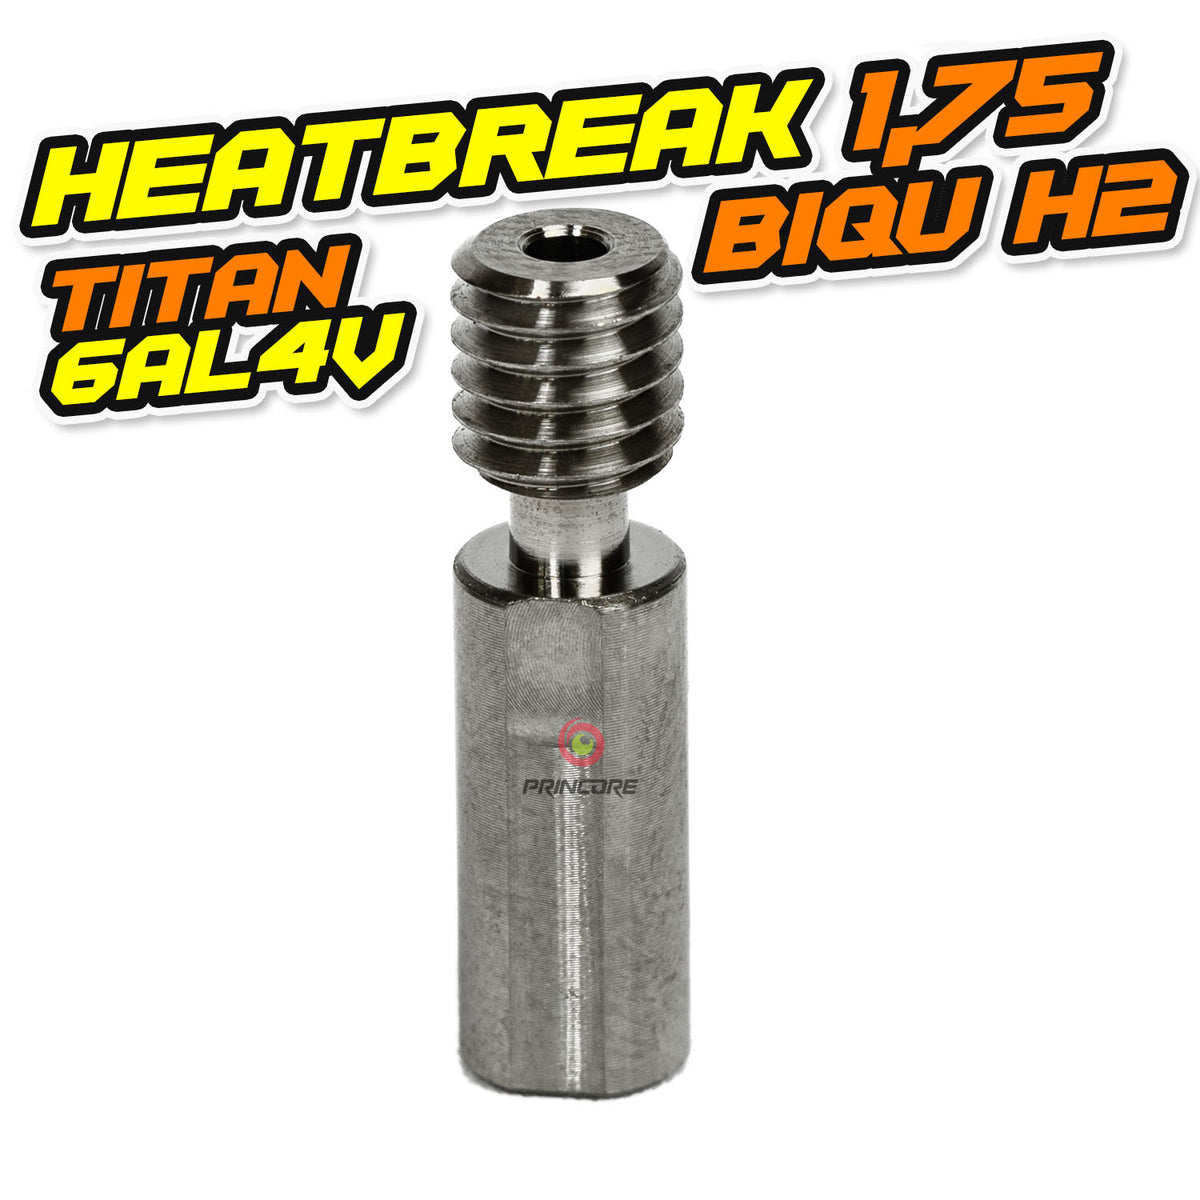 Tuning Heatbreak TITAN 6AL4V BIQU H2